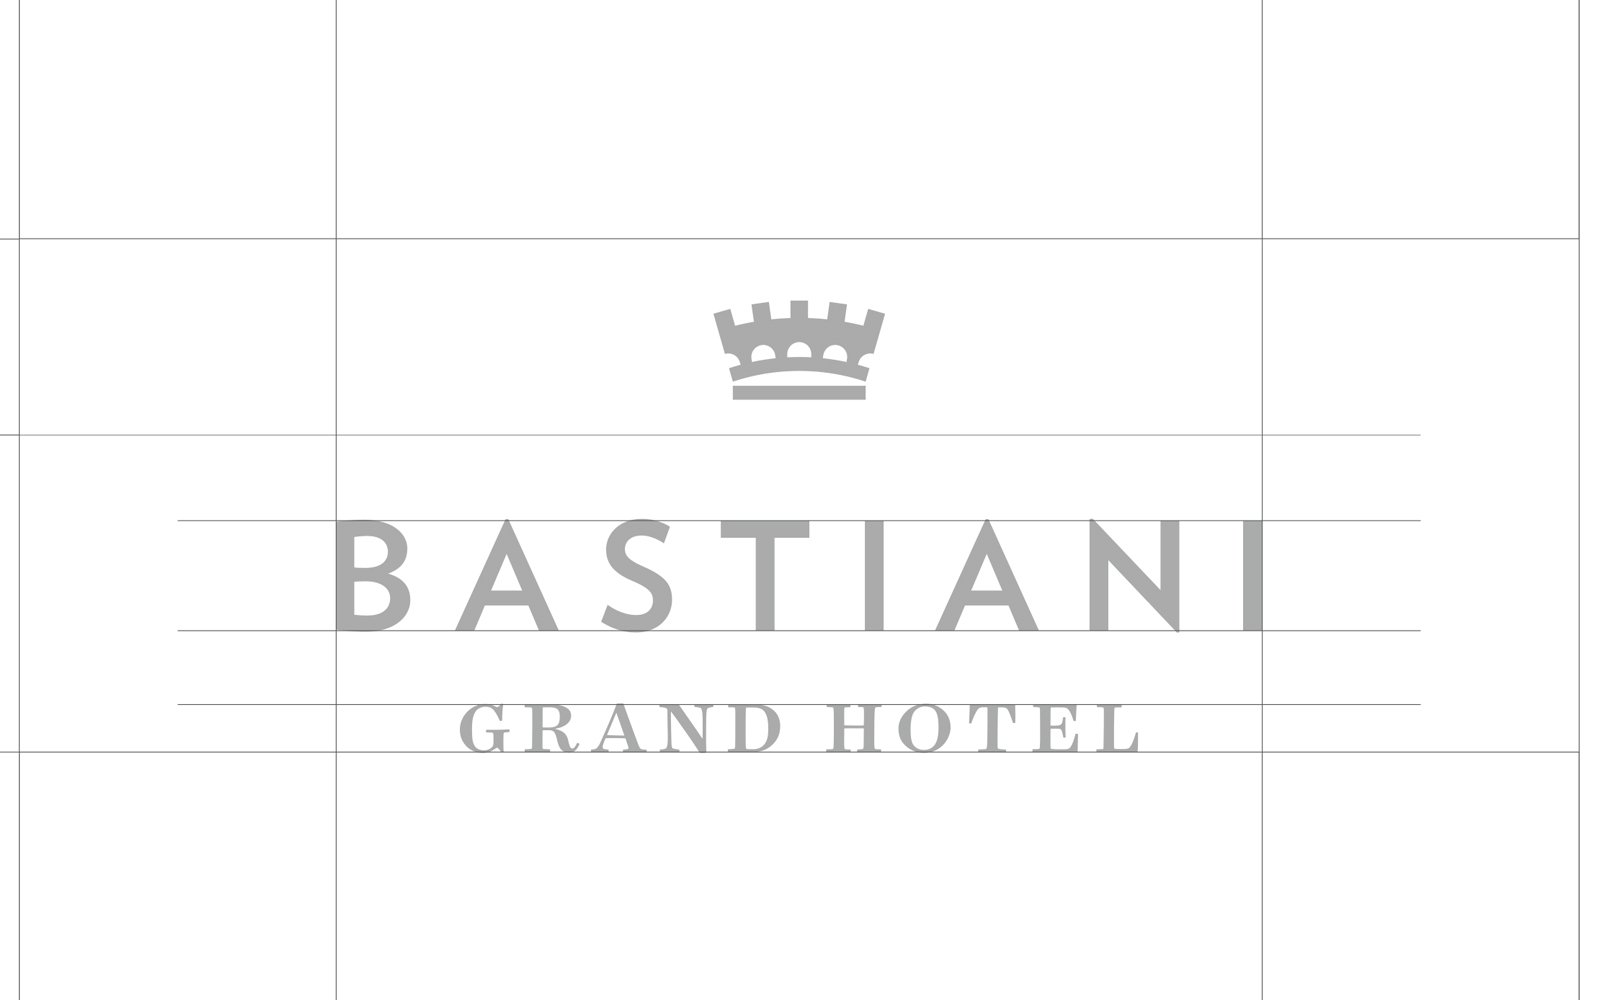 New logo for Grand Hotel Bastiani